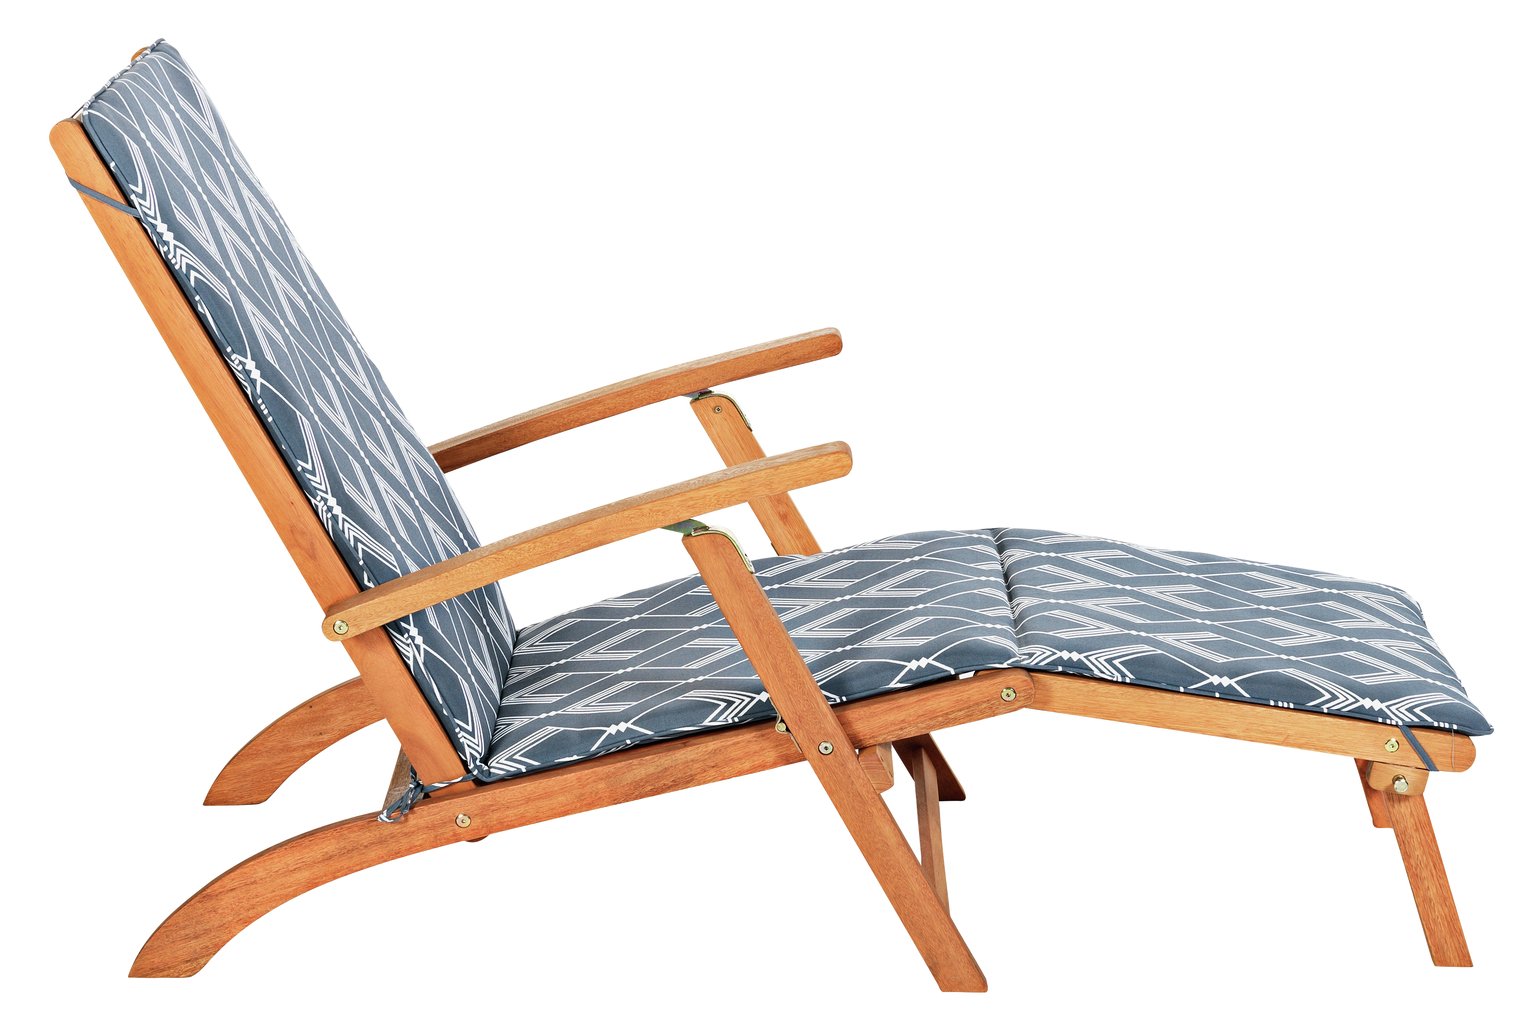 Argos Home Steamer Chair with Zig Cushion Reviews